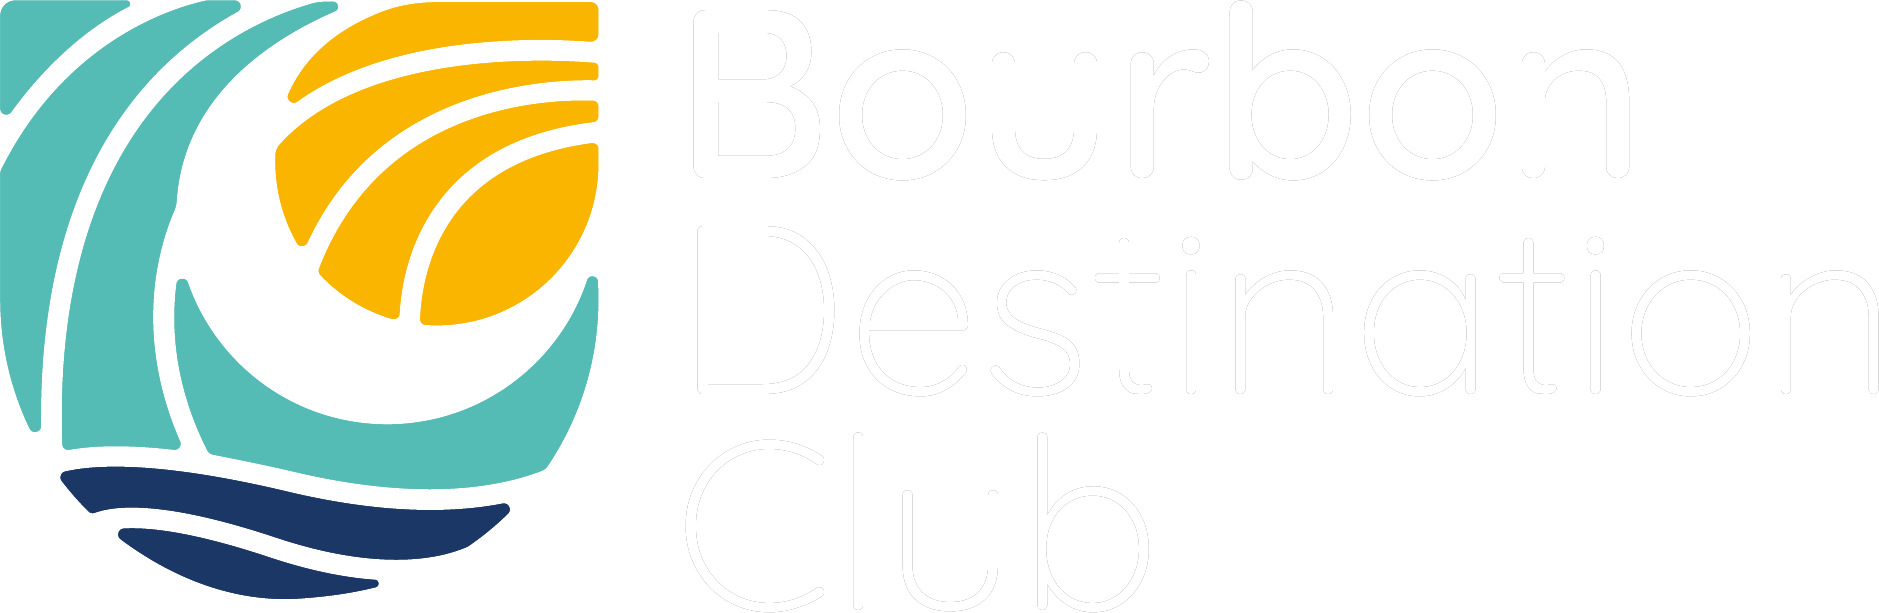 Bourbon Destination Club